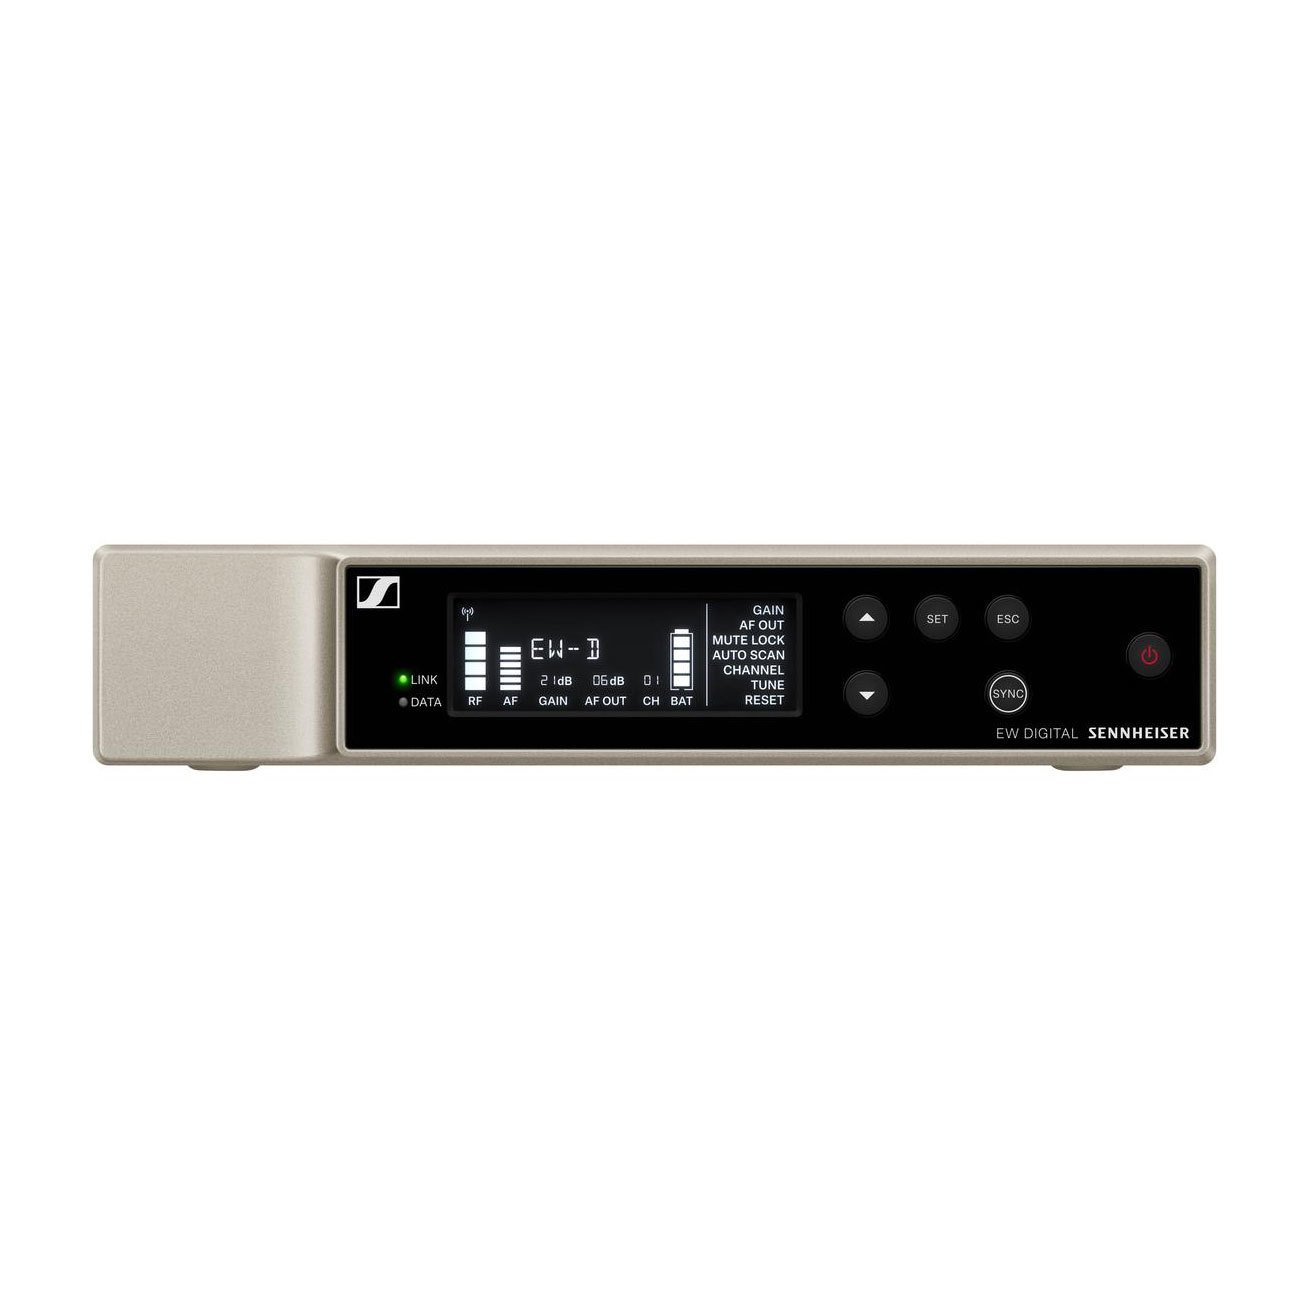 Sennheiser EW-D 835-S SET (S7-10) Digitales drahtloses Handmikrofonset